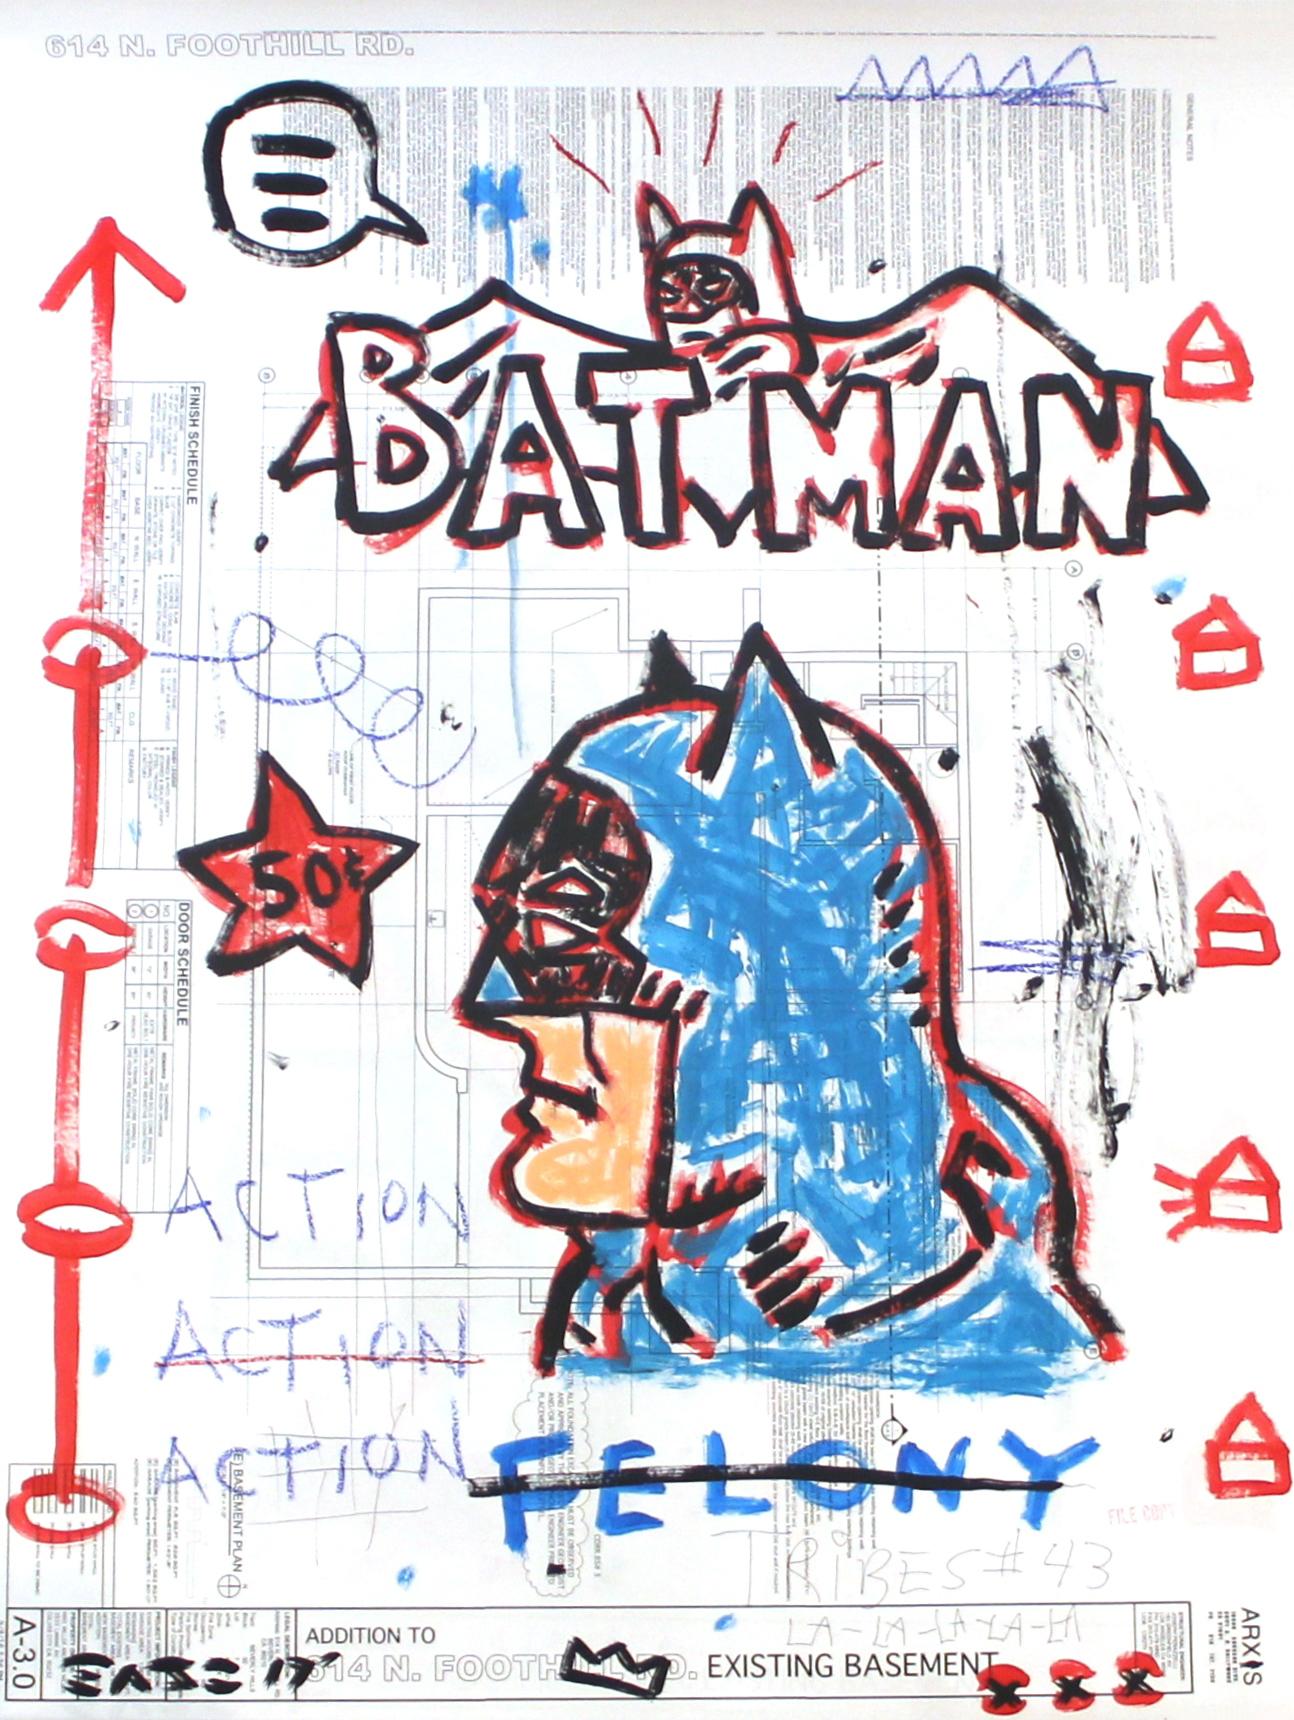 Gary John Figurative Painting – „Don't Speak“ Großes Original Batman Pop-Art-Gemälde auf architektonischem Papier 